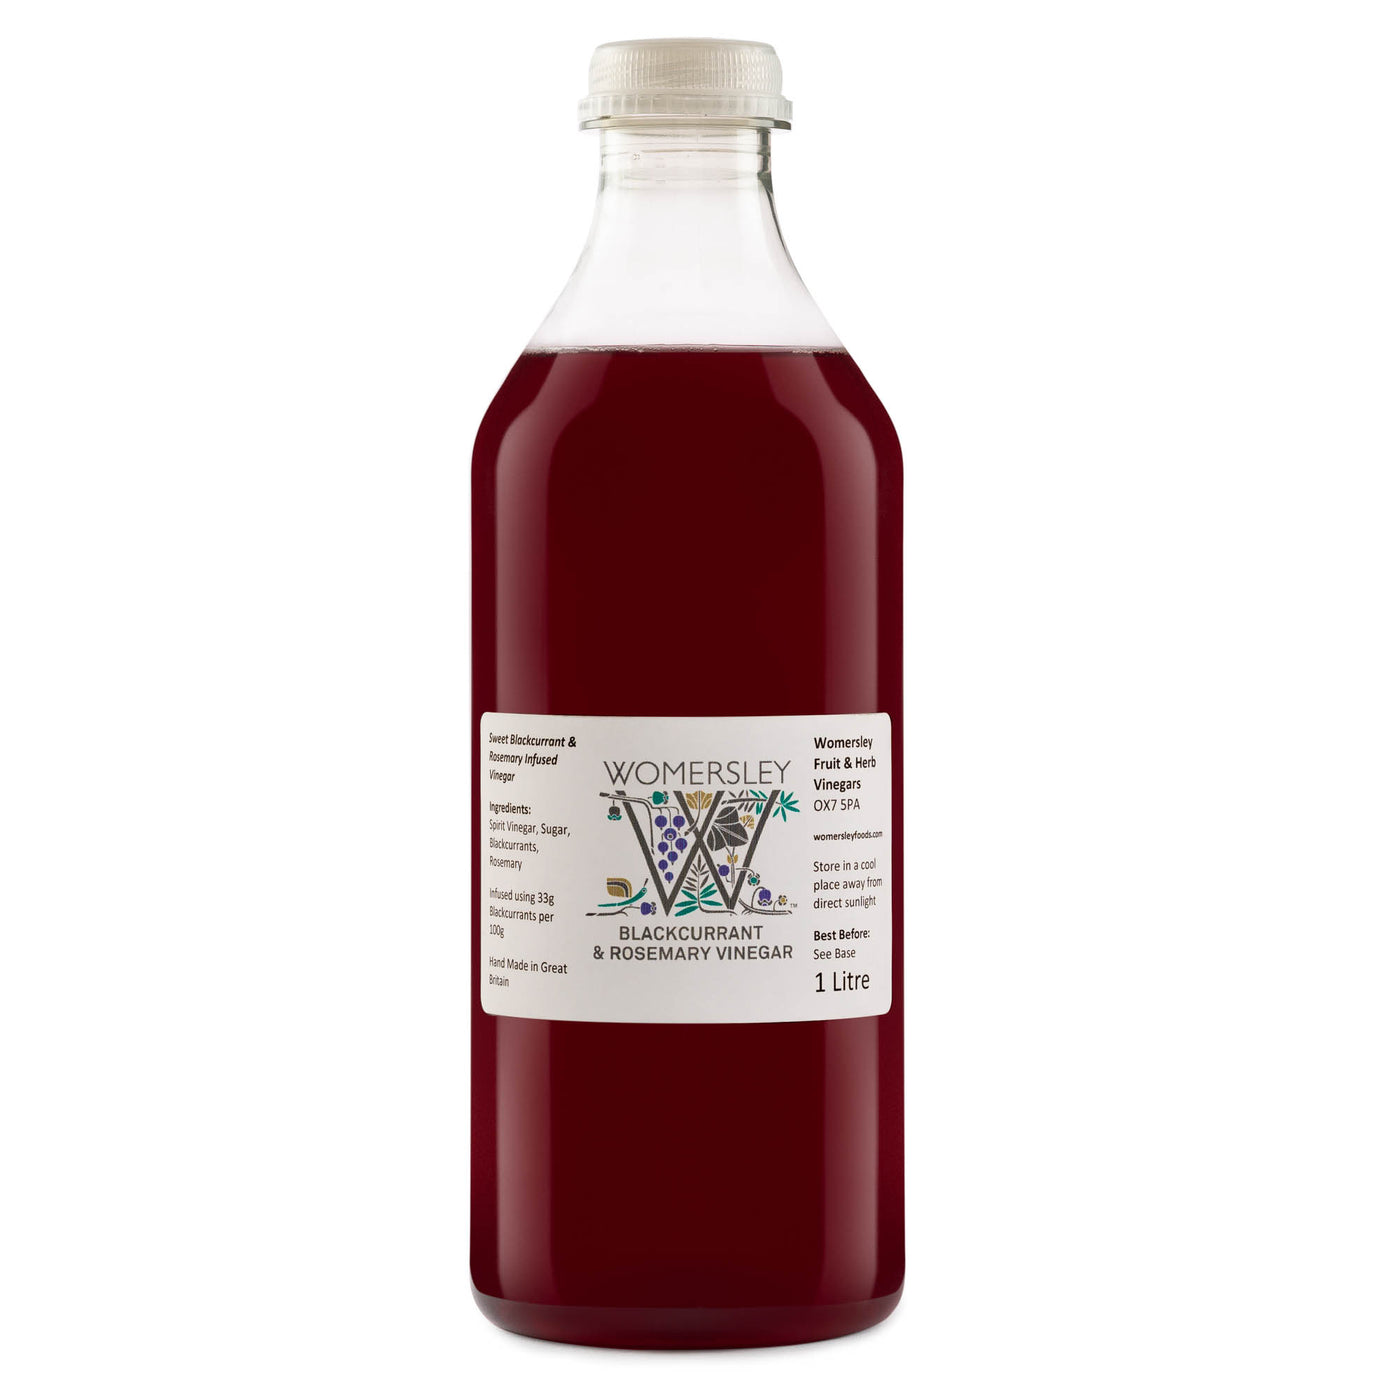 SALE SHORT DATED Blackcurrant & Rosemary Vinegar 50% OFF